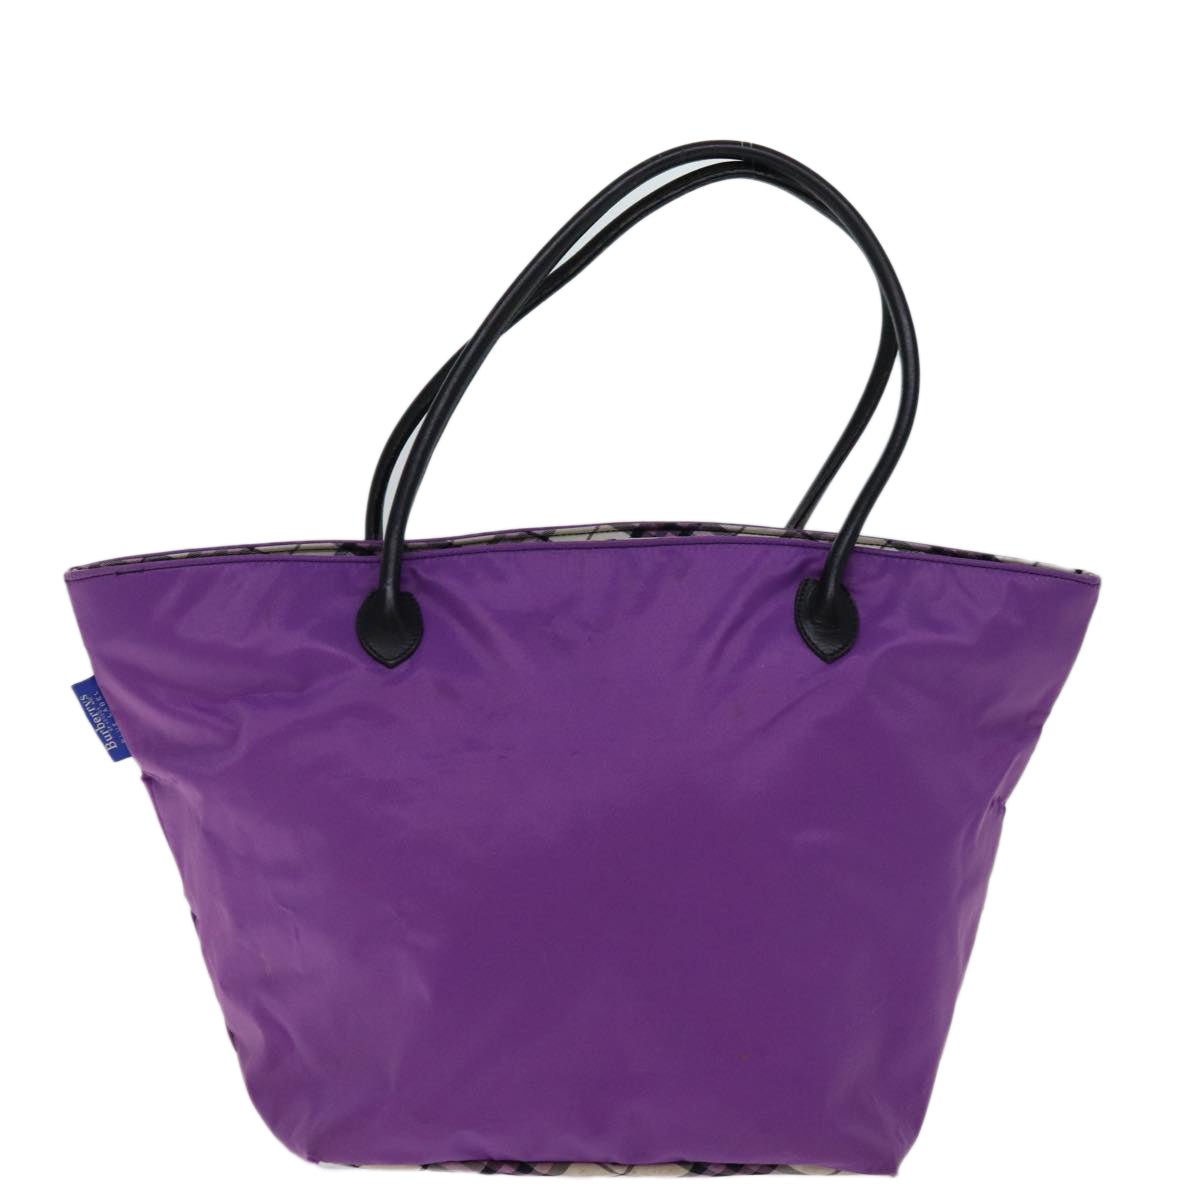 Burberrys Nova Check Blue Label Tote Bag Nylon Purple Auth bs14287 - 0